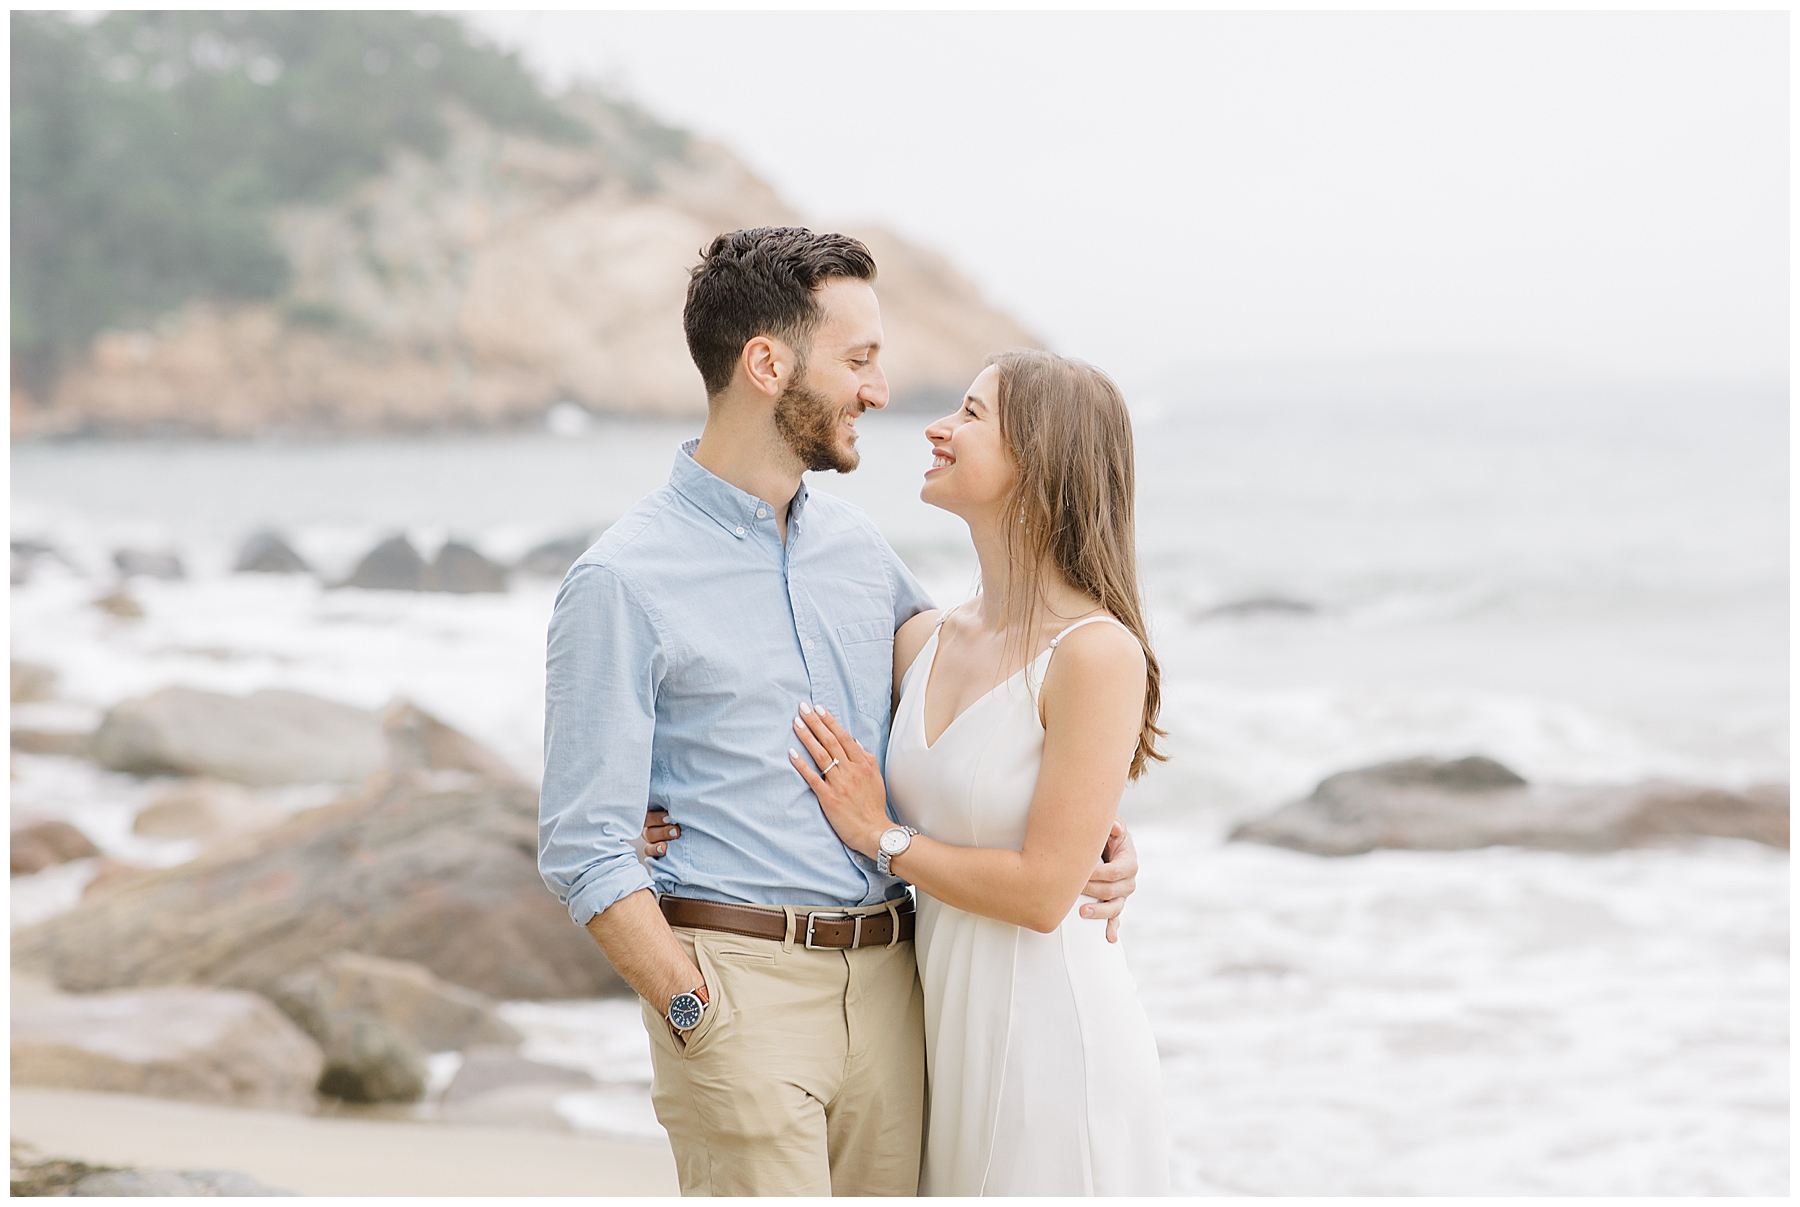 Boston engagement photographer, Stephanie Berenson captures happy couple at North Shore Beach